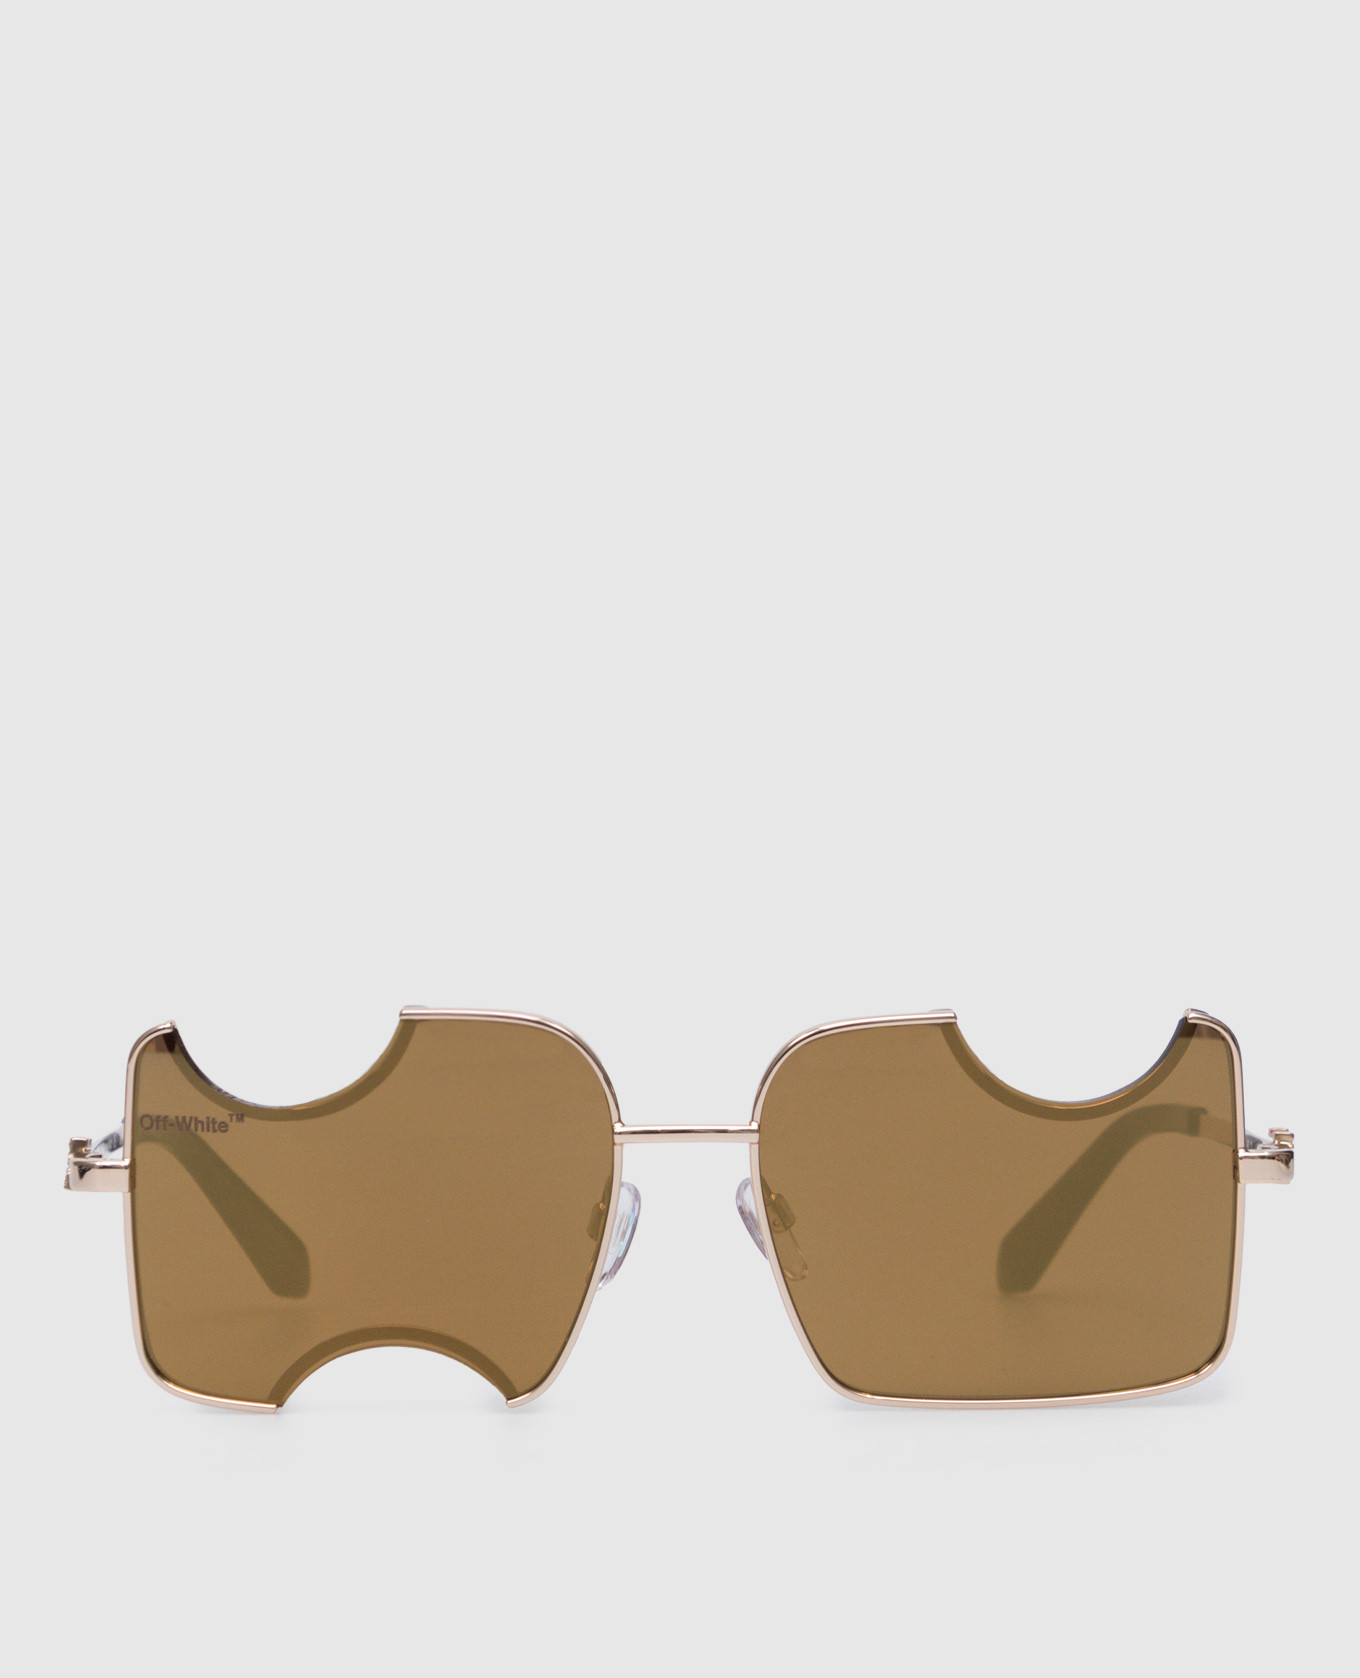 Gold Salvador sunglasses with textured logo